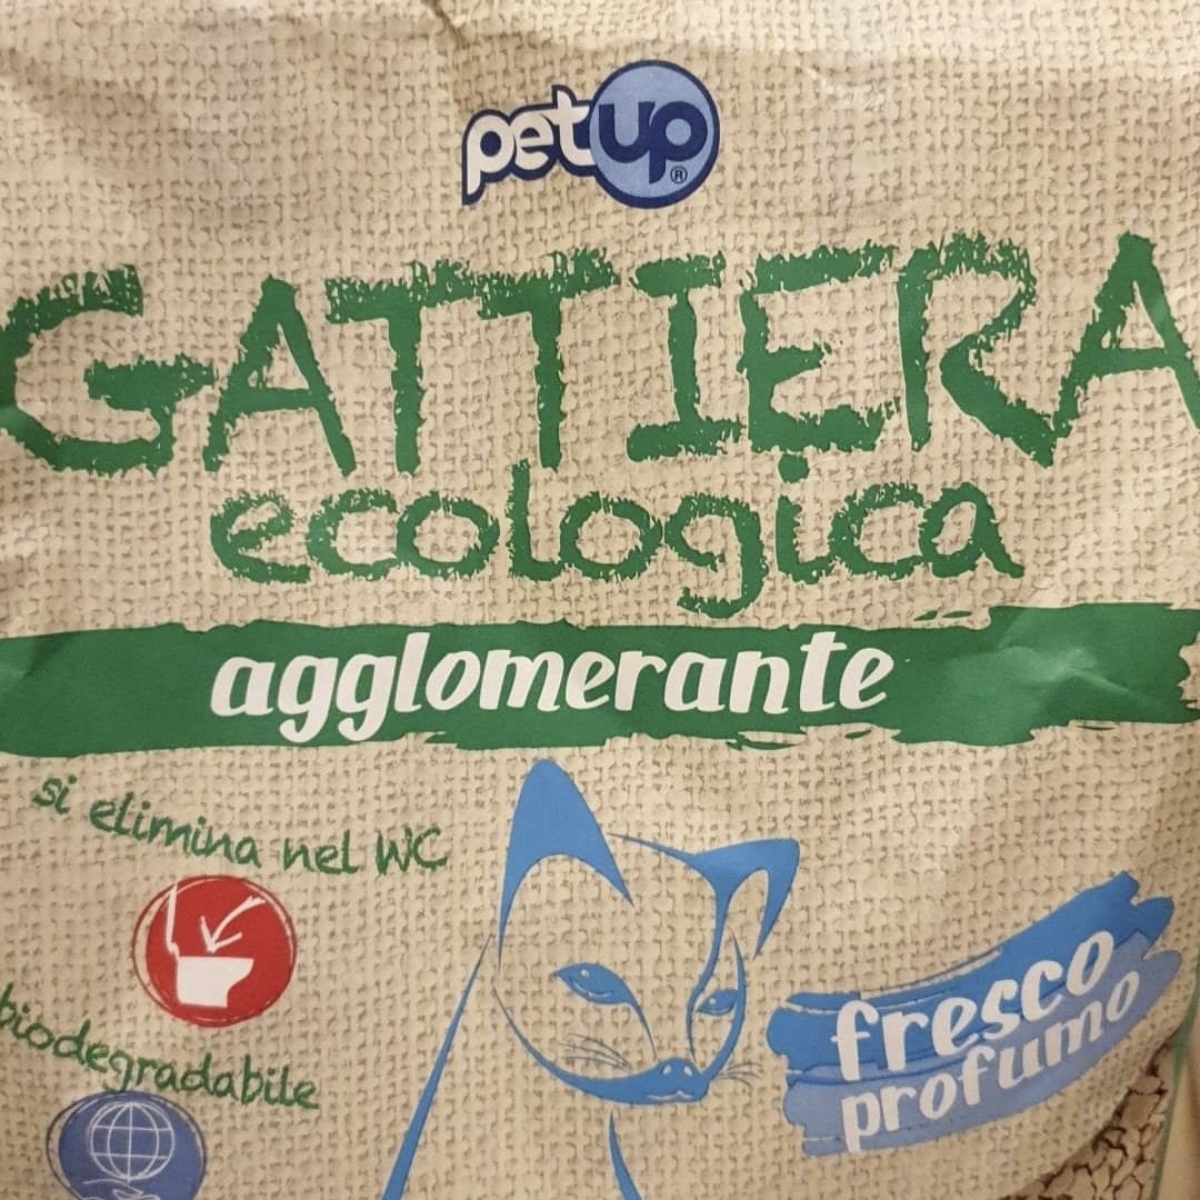 Pet up Gattiera Ecologica Agglomerante Reviews | abillion